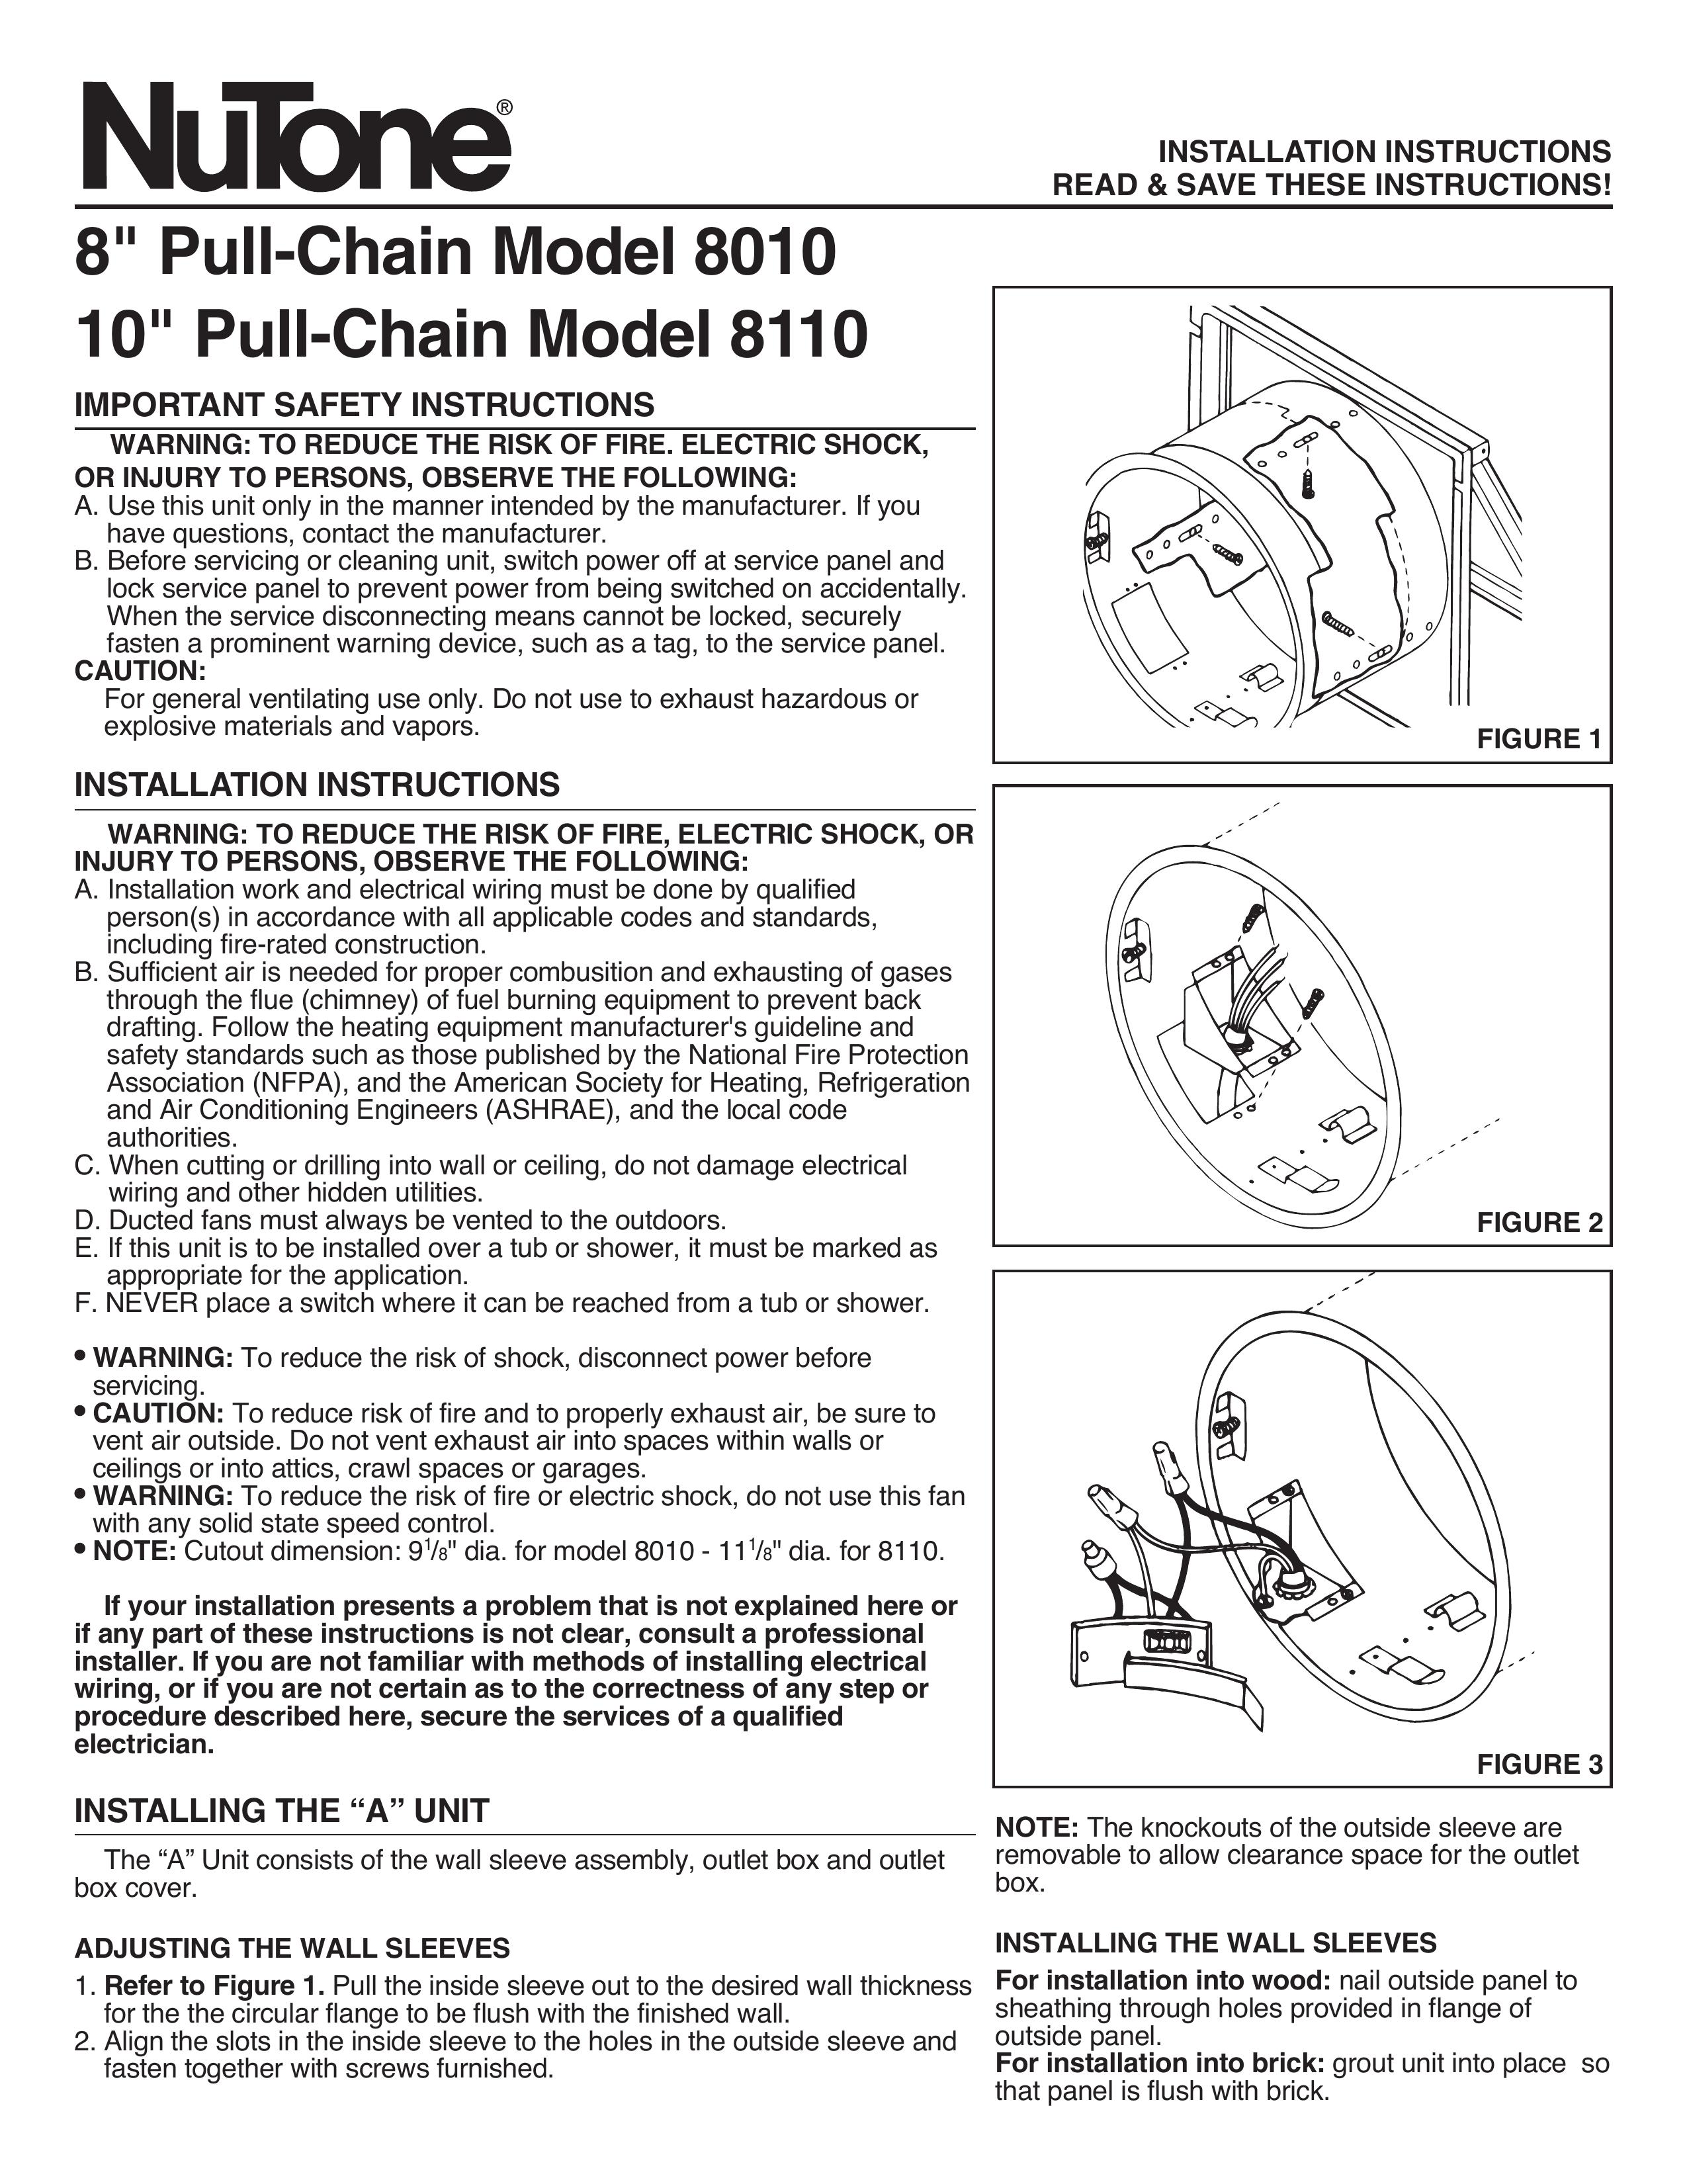 NuTone 8010 Ventilation Hood User Manual